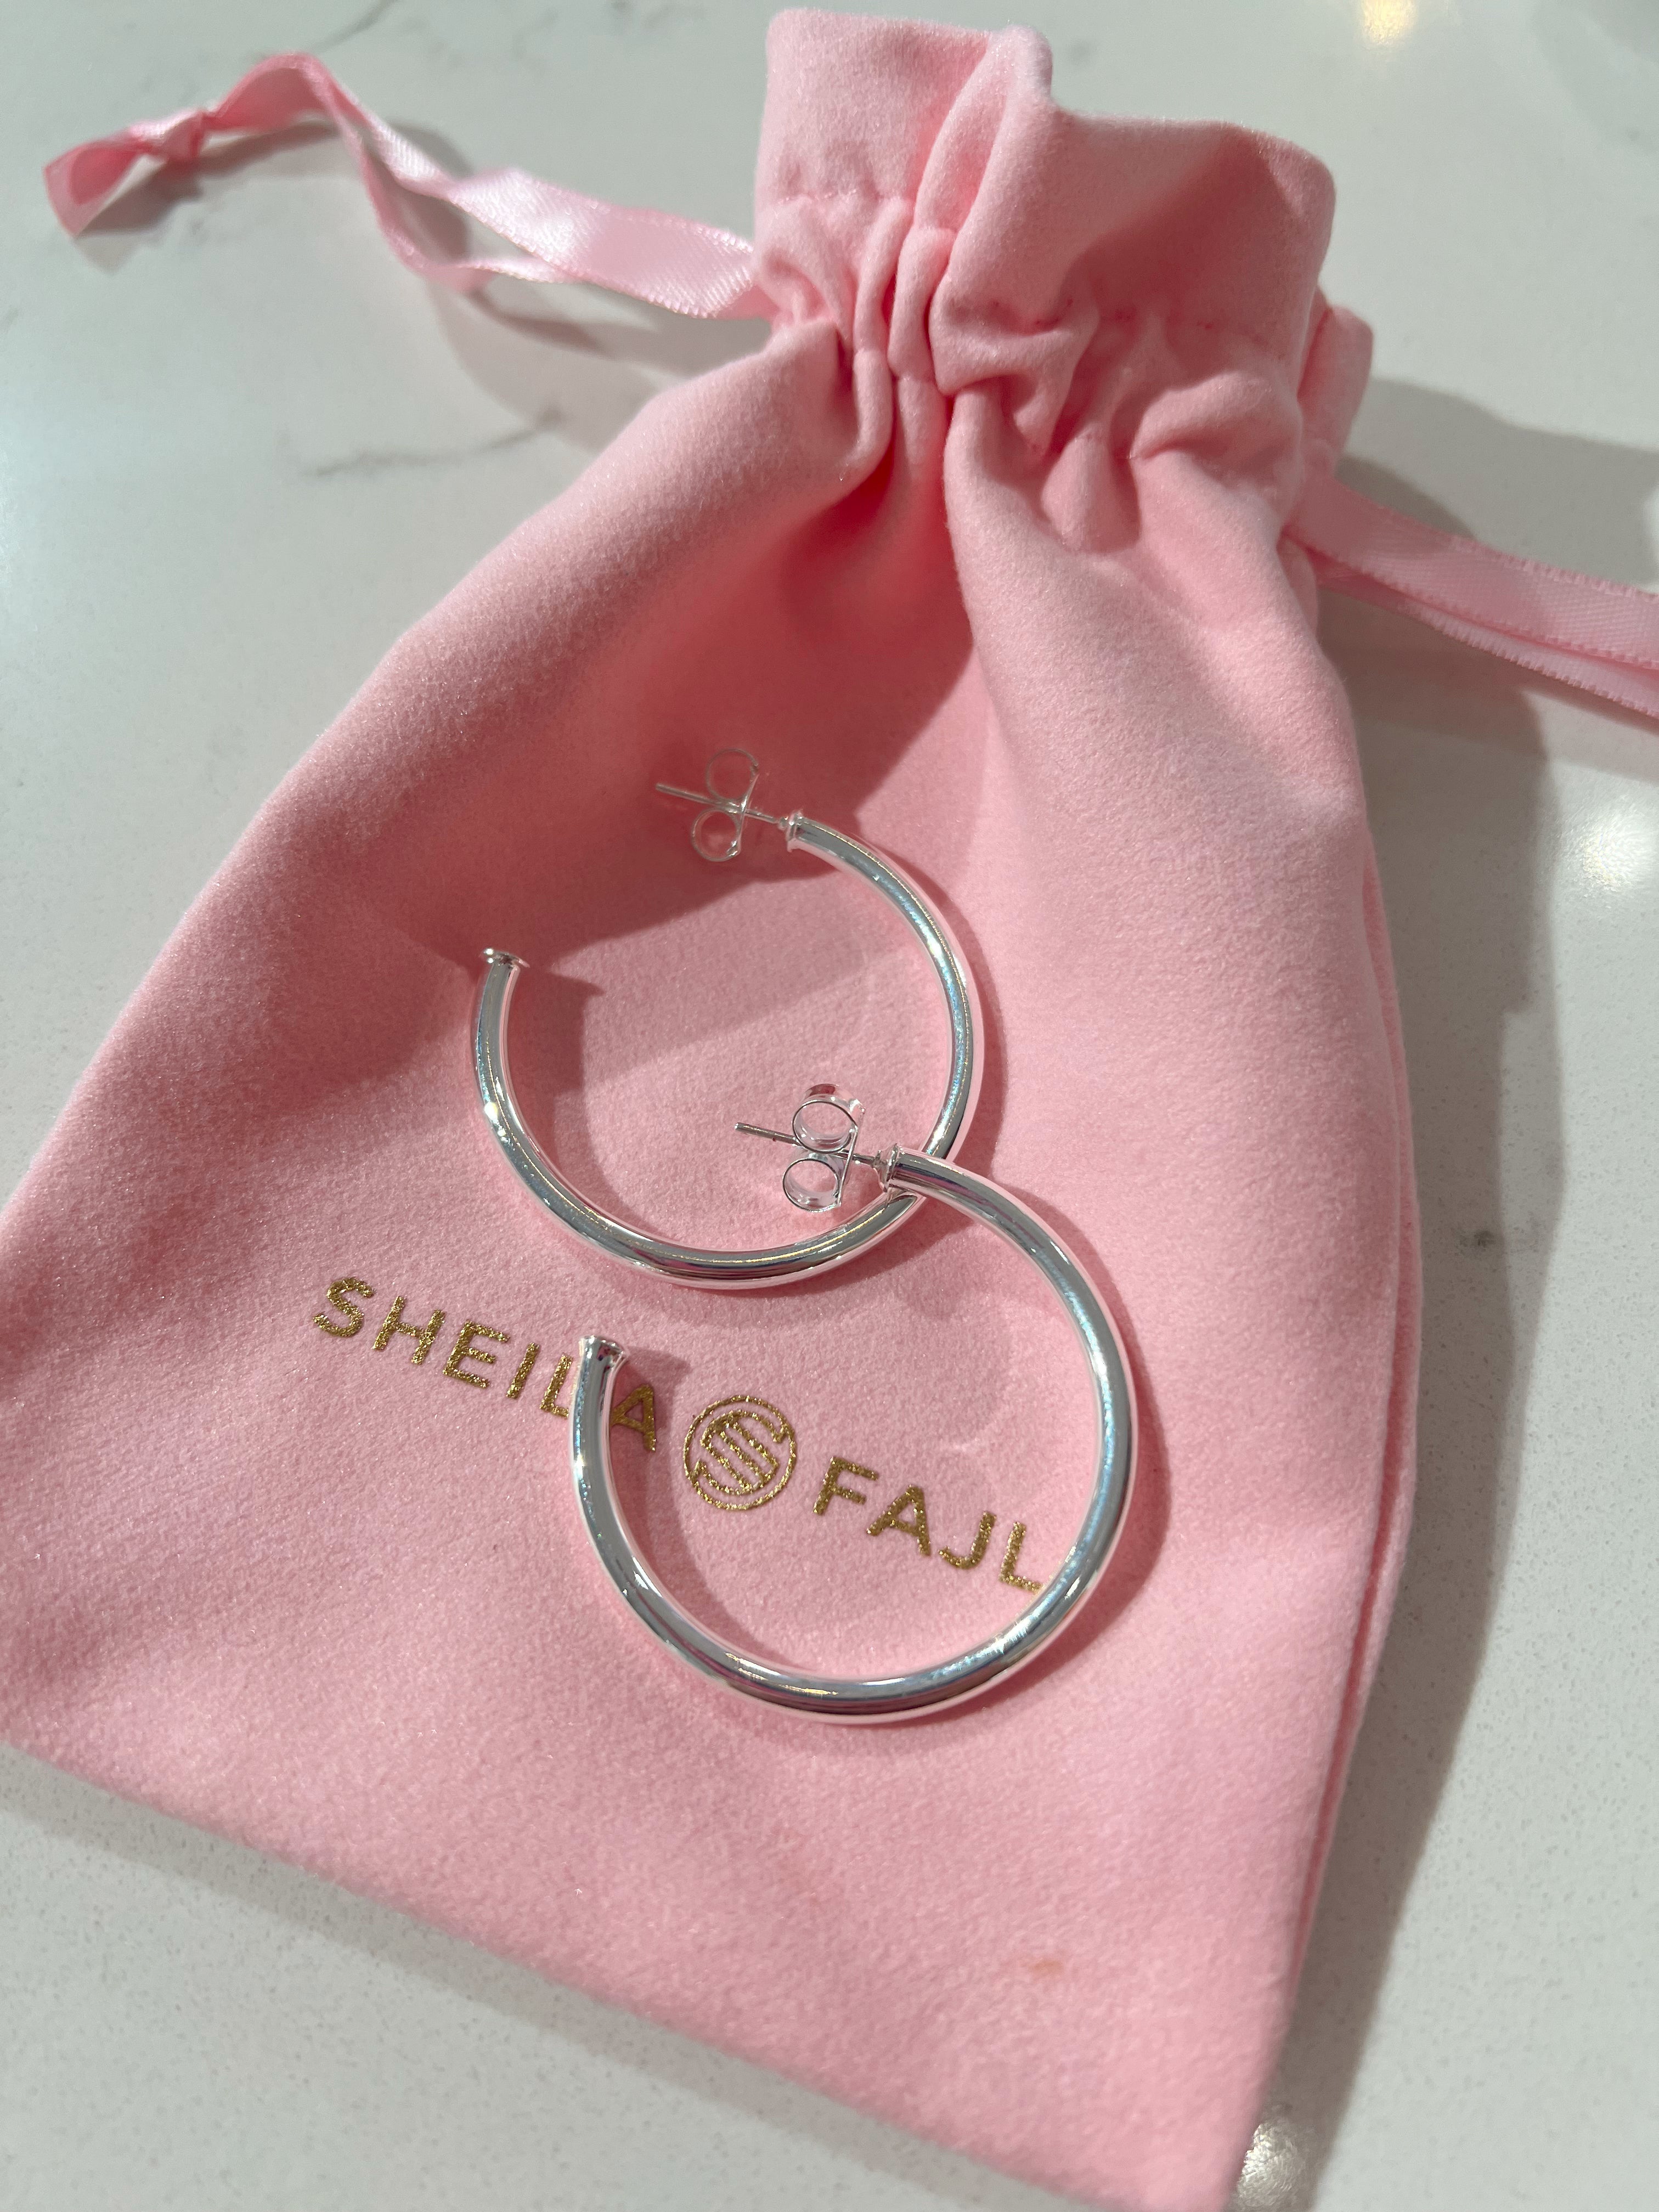 Shiny Silver Petite Everybody's Favorite Hoops by Sheila Fajl